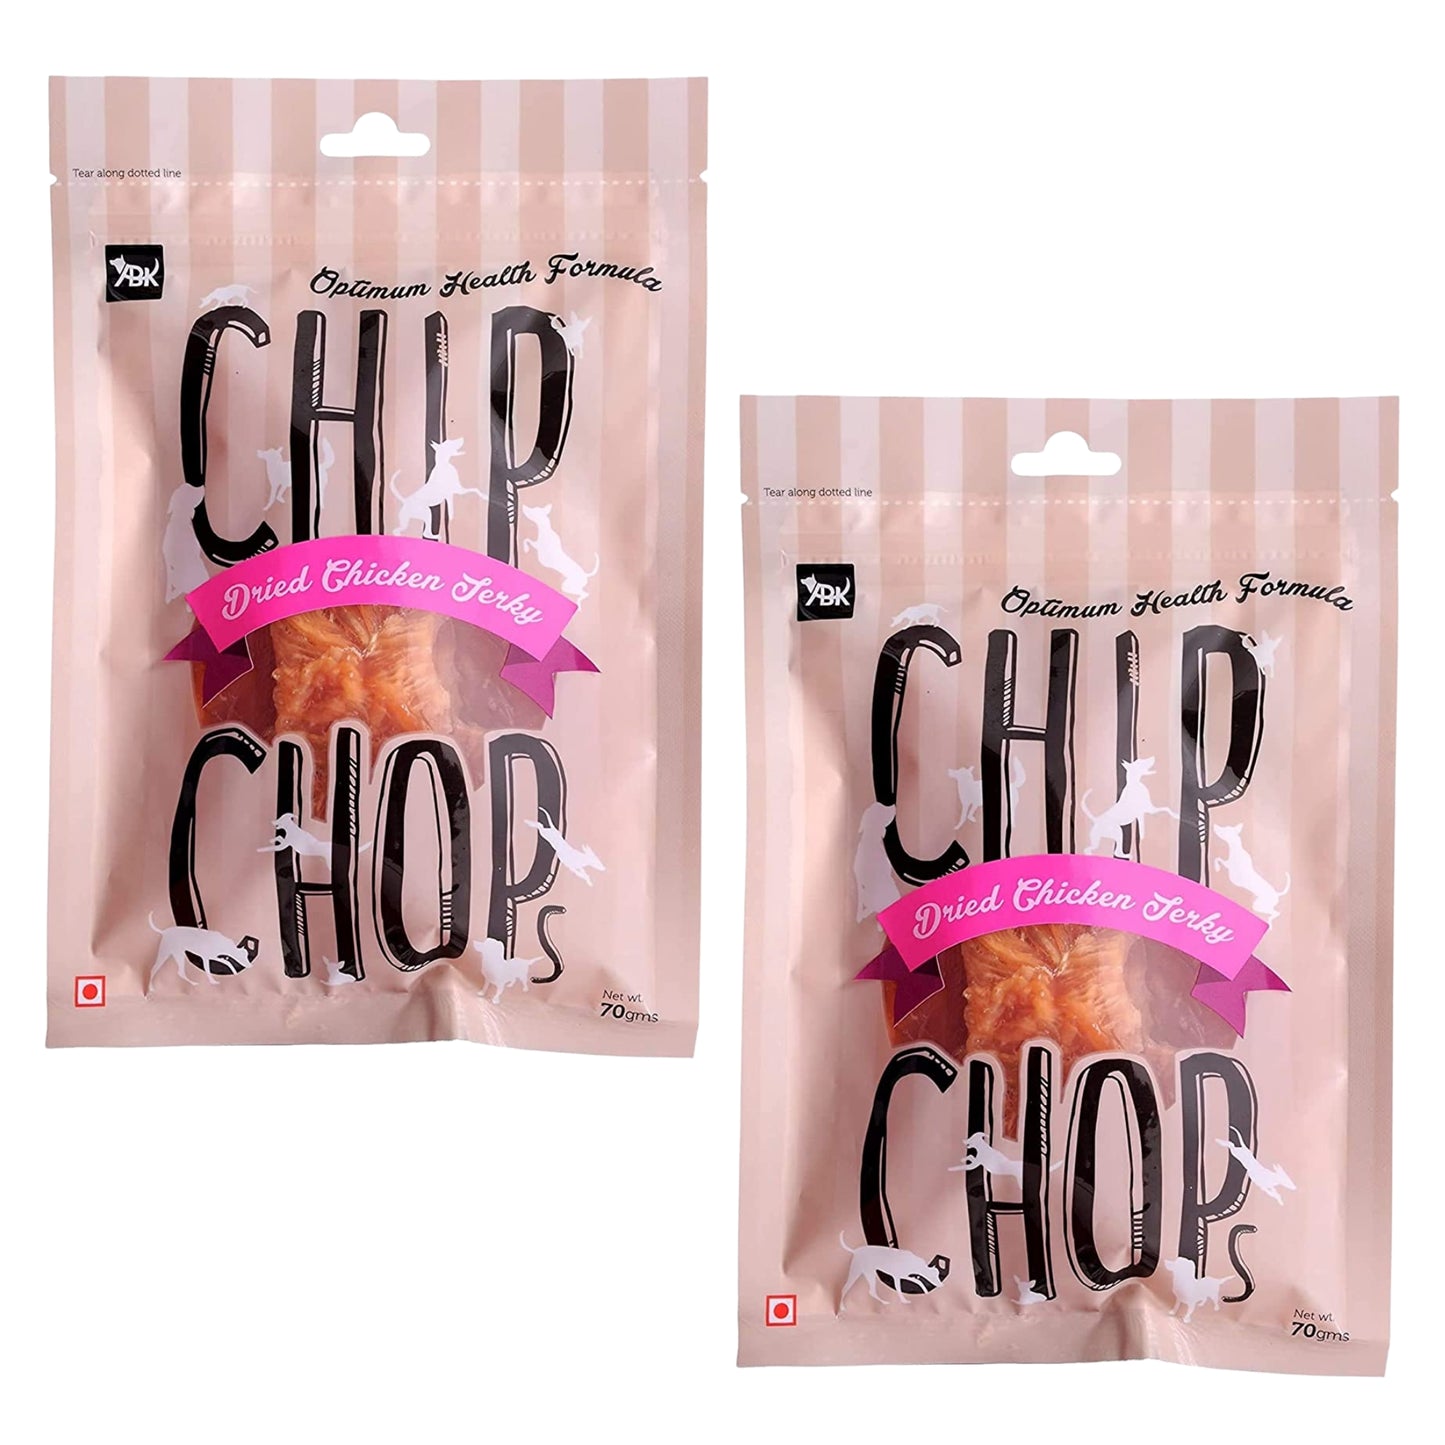 Chip Chops Dog Treats - Sun Dried Chicken Jerky (70gm, Pack of 2)